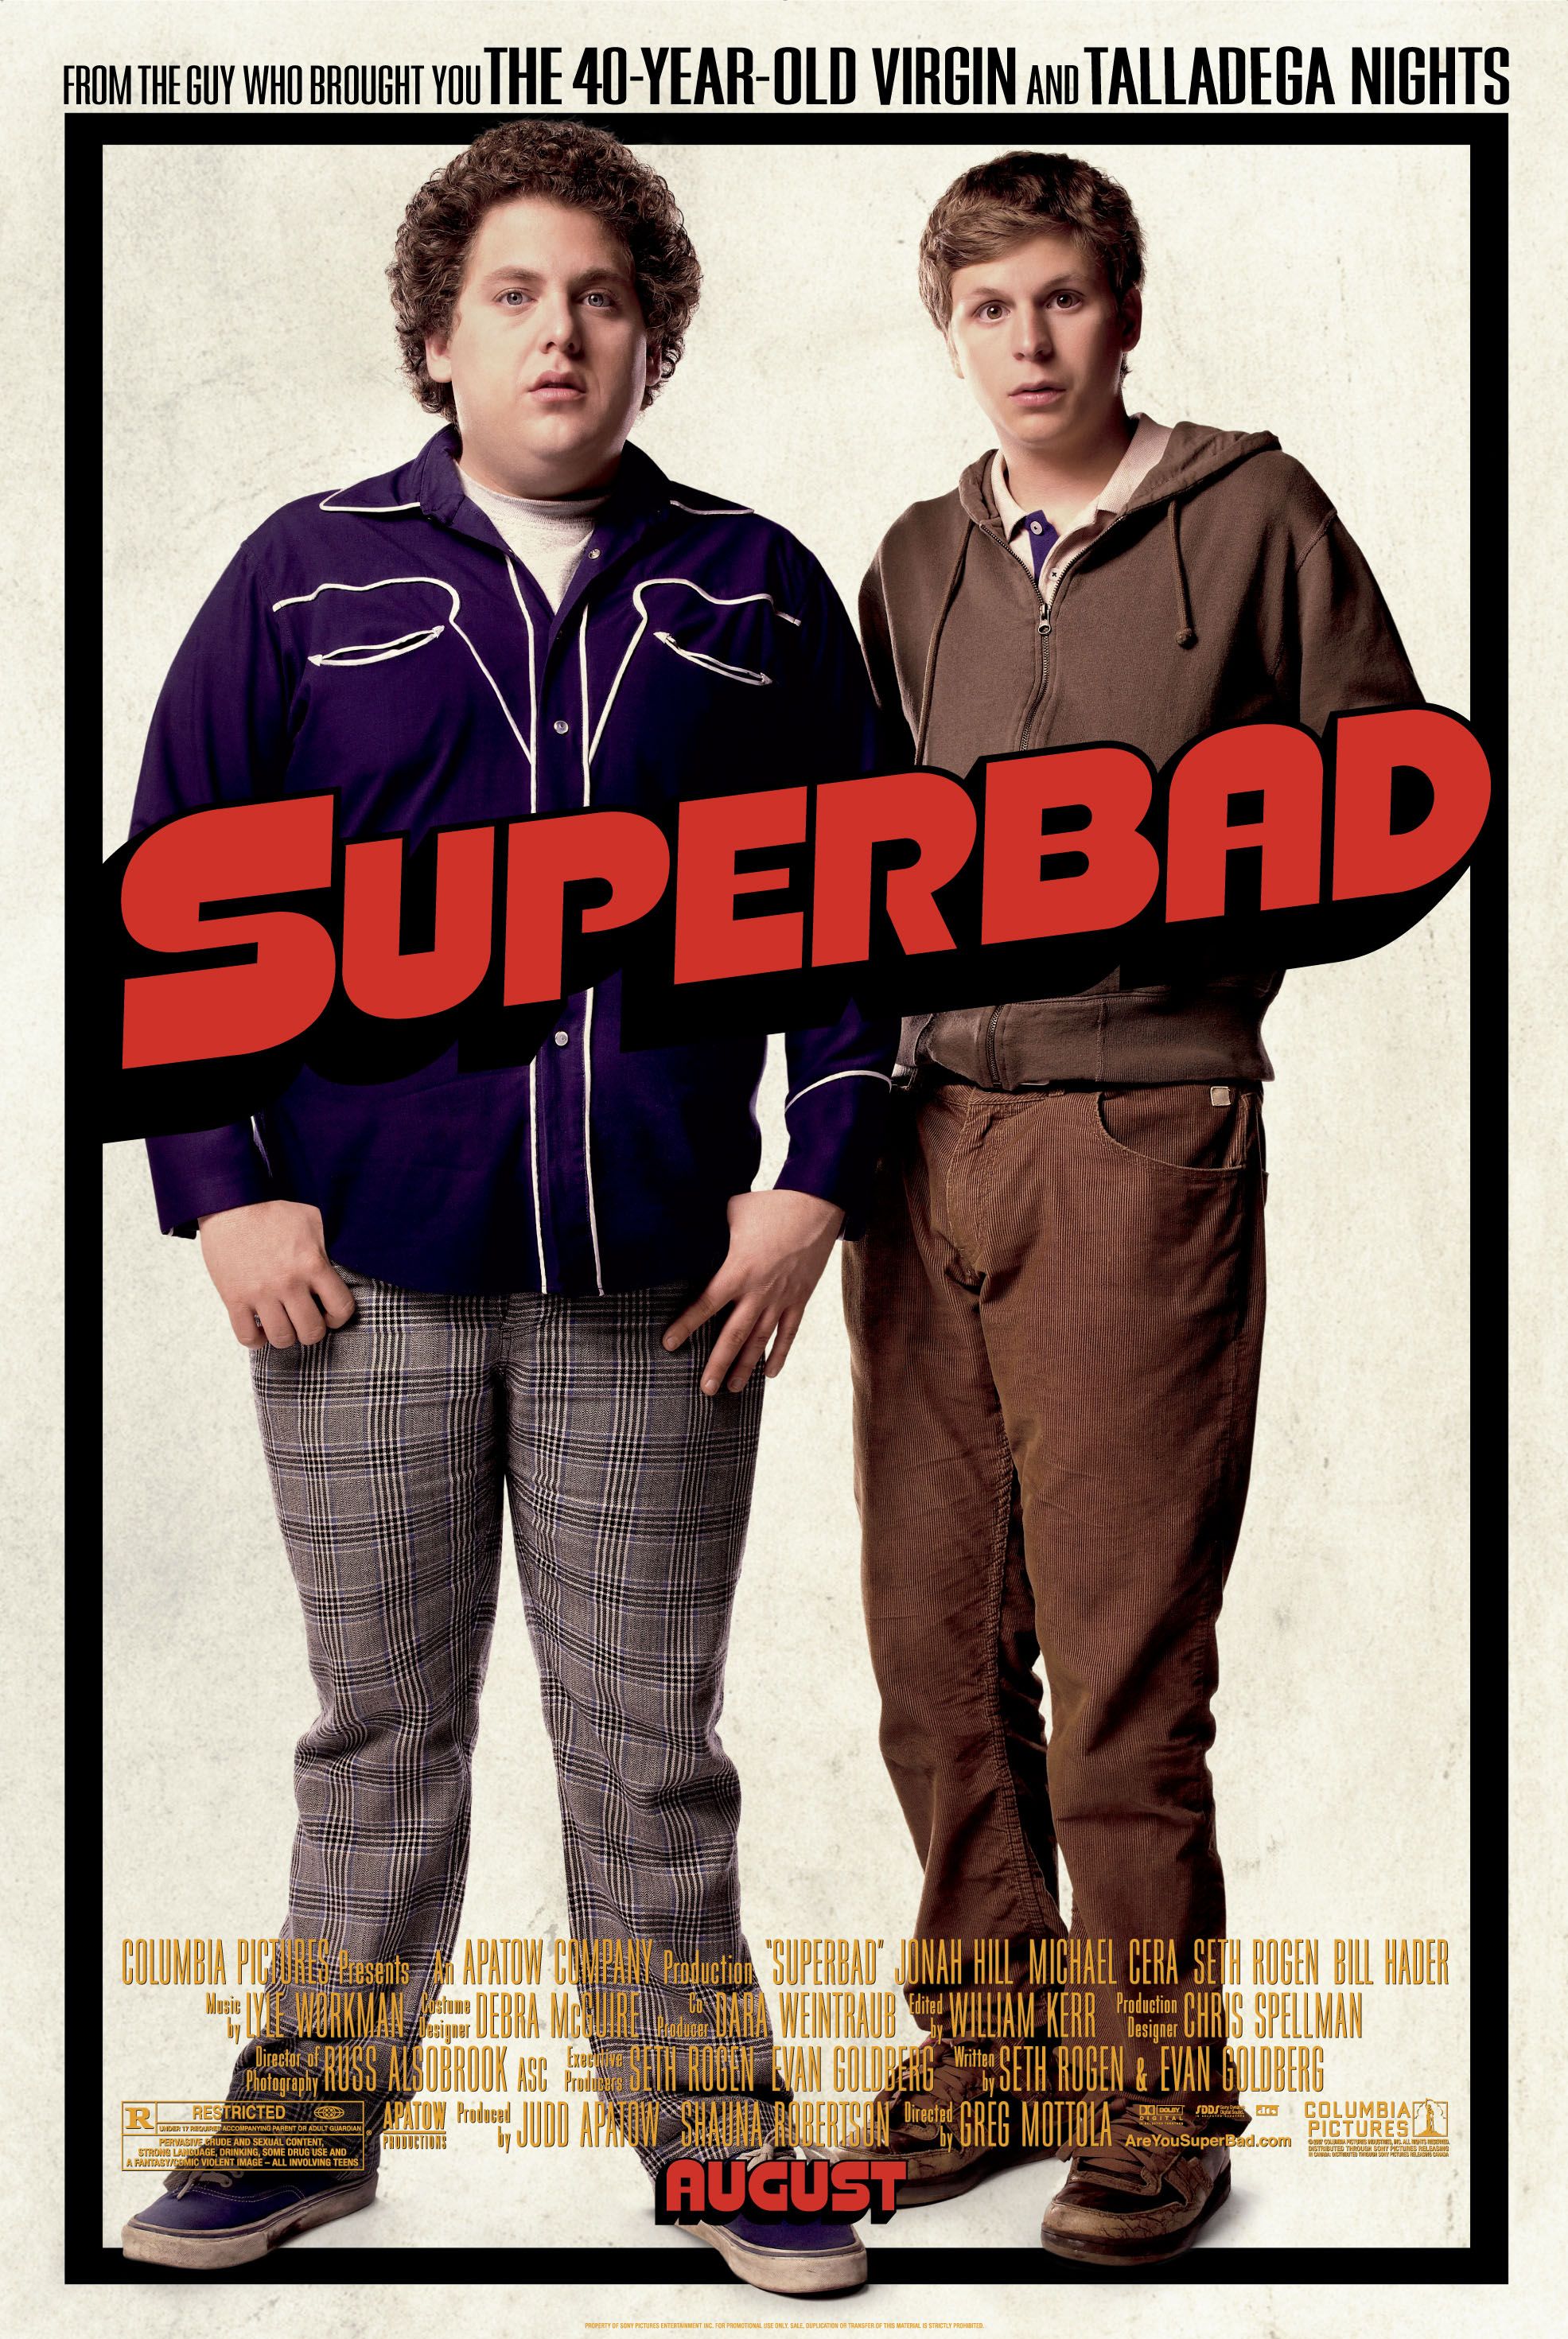 Superbad (2007) | ซูเปอร์แบด คู่เฉิ่มฮ็อตฉ่า พ.ศ. 2550 ‧ ตลก/วัยรุ่น ‧ 1 ชม. 59 นาที